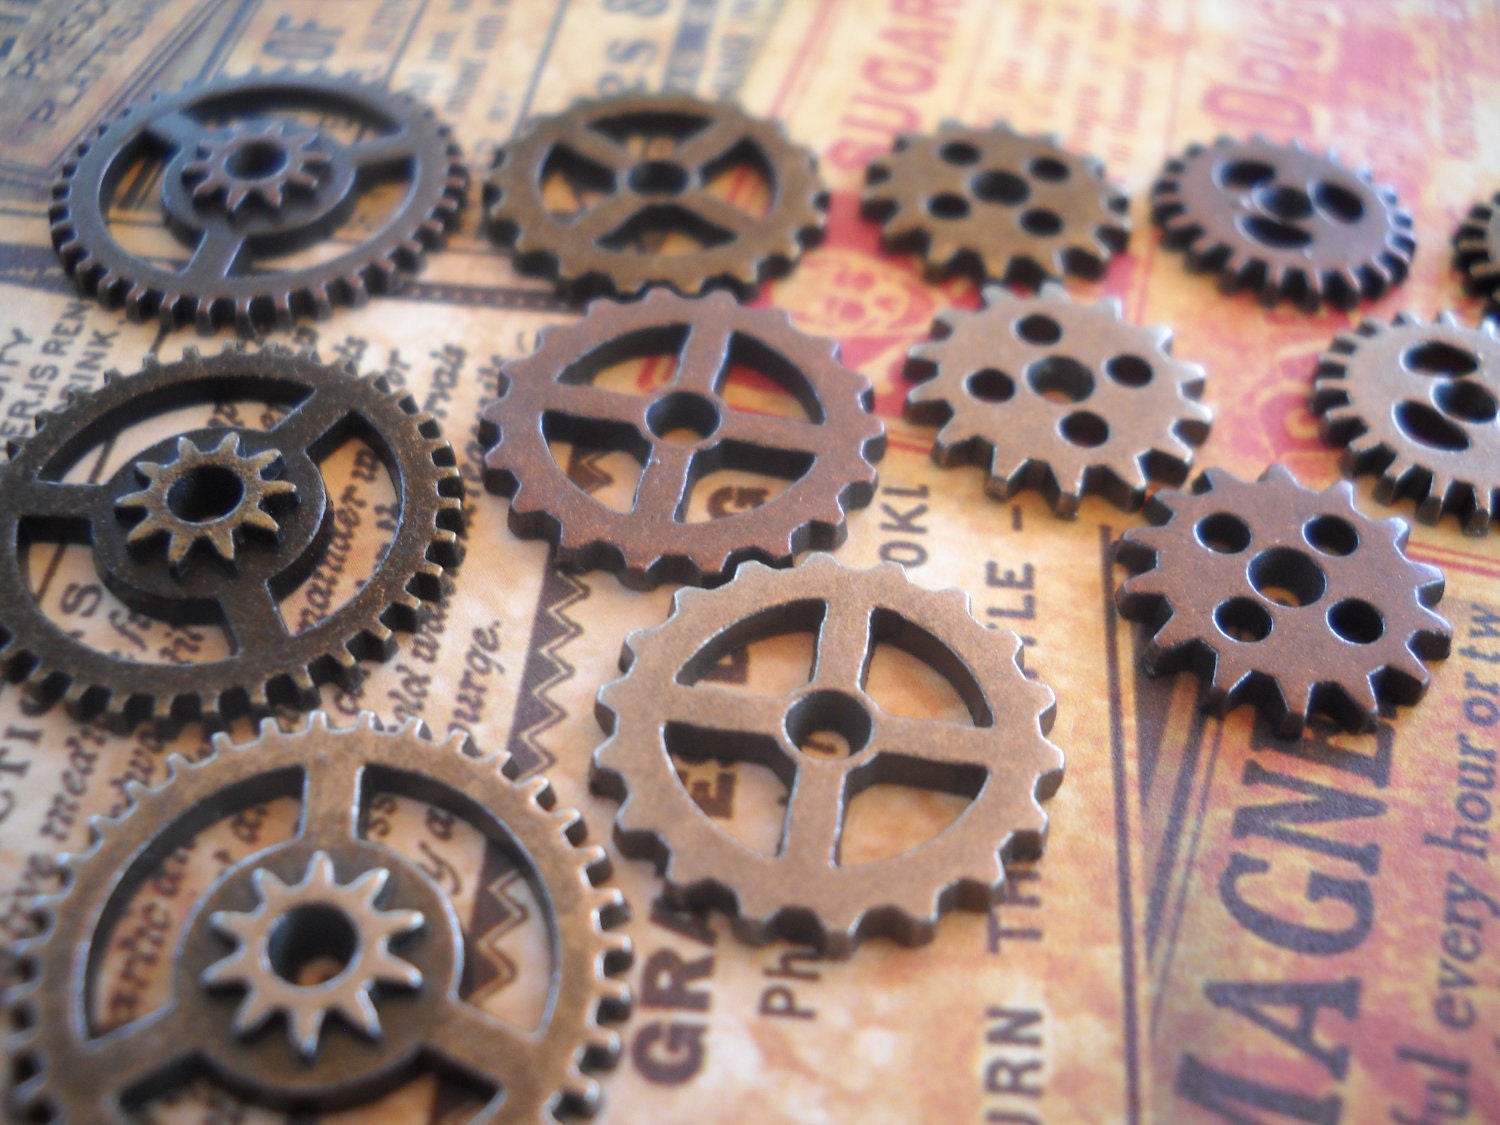  ArrowSarah Steampunk Watch Pieces and Parts - 75 Plus Pieces of  Vintage Gears, Wheels, cogs, Hands, Crowns, Stems, etc.